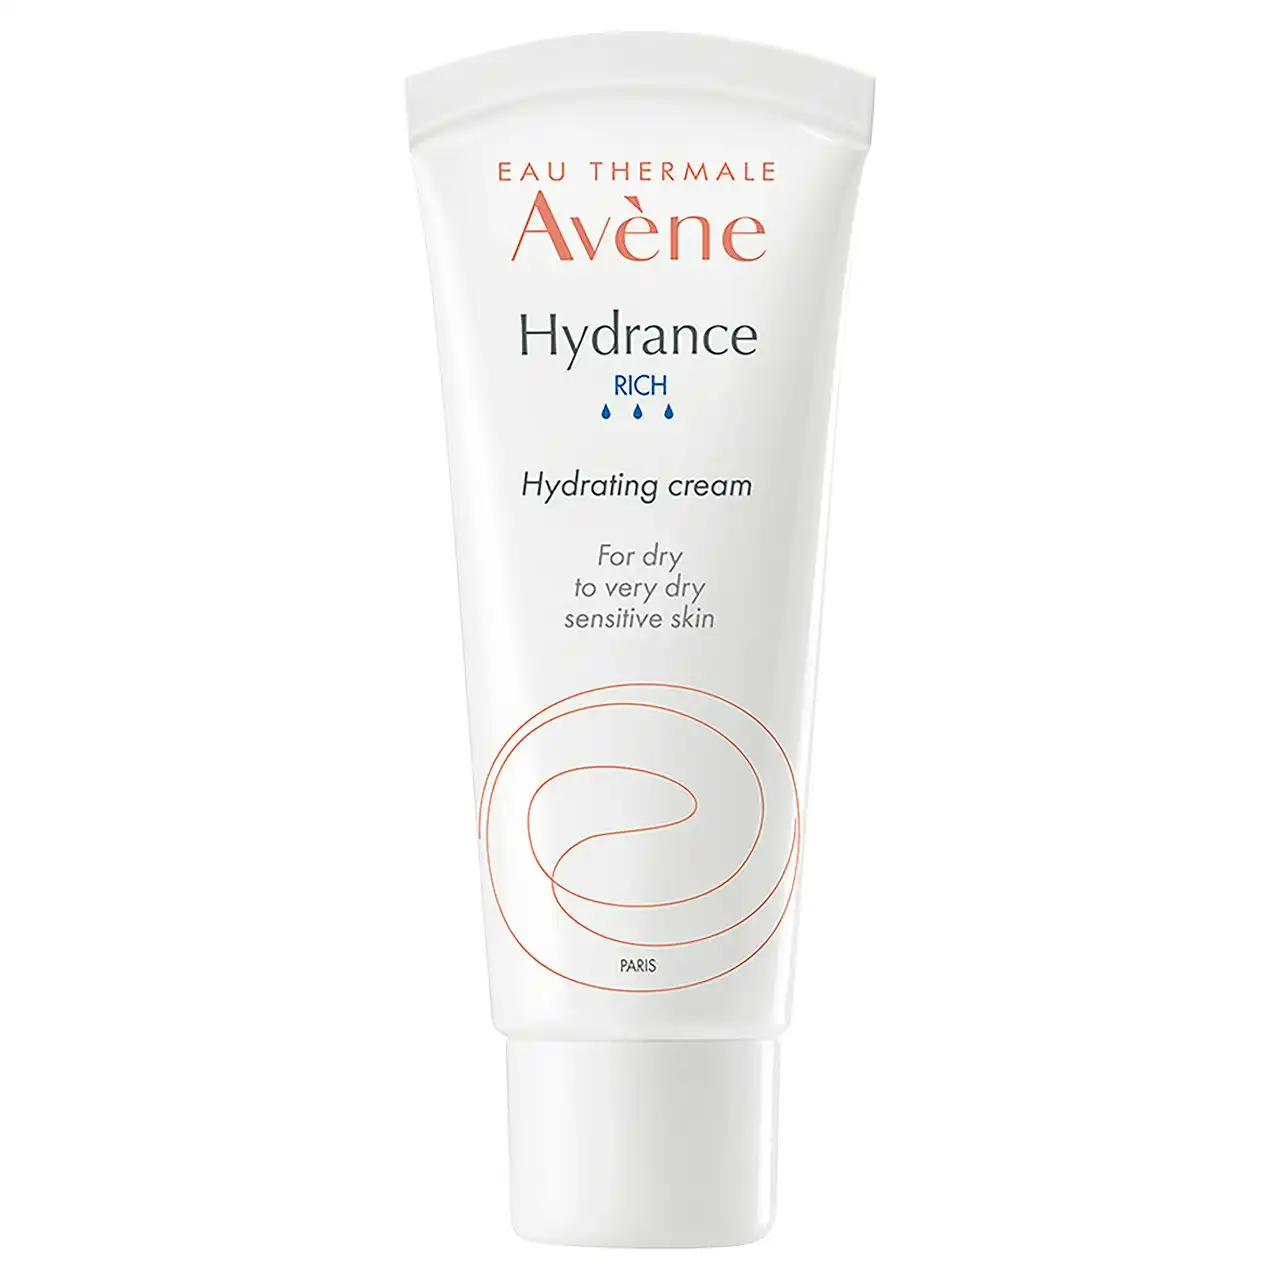 Avene Hydrance Rich Hydrating Cream 40ml - Moisturiser for dehydrated skin